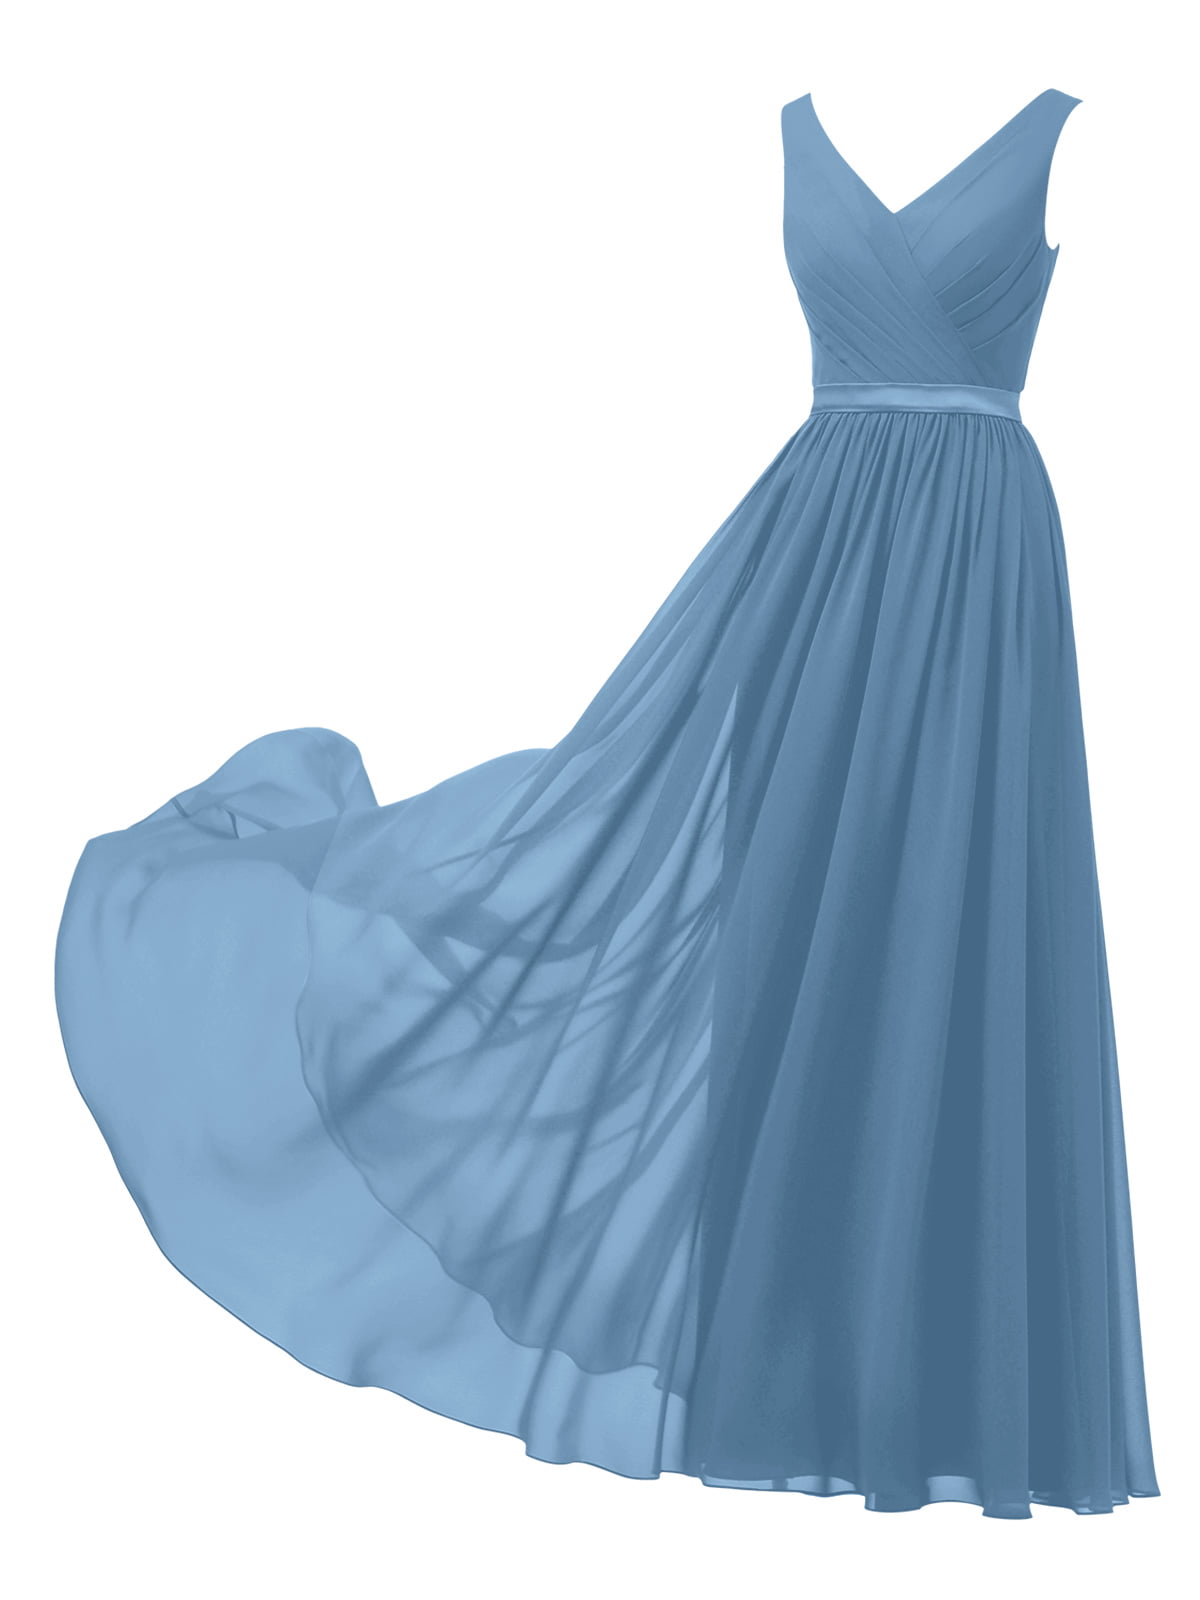 Alicepub Crisscross High-Neck Chiffon Bridesmaid Dress Long Formal Dresses Prom Evening Gown